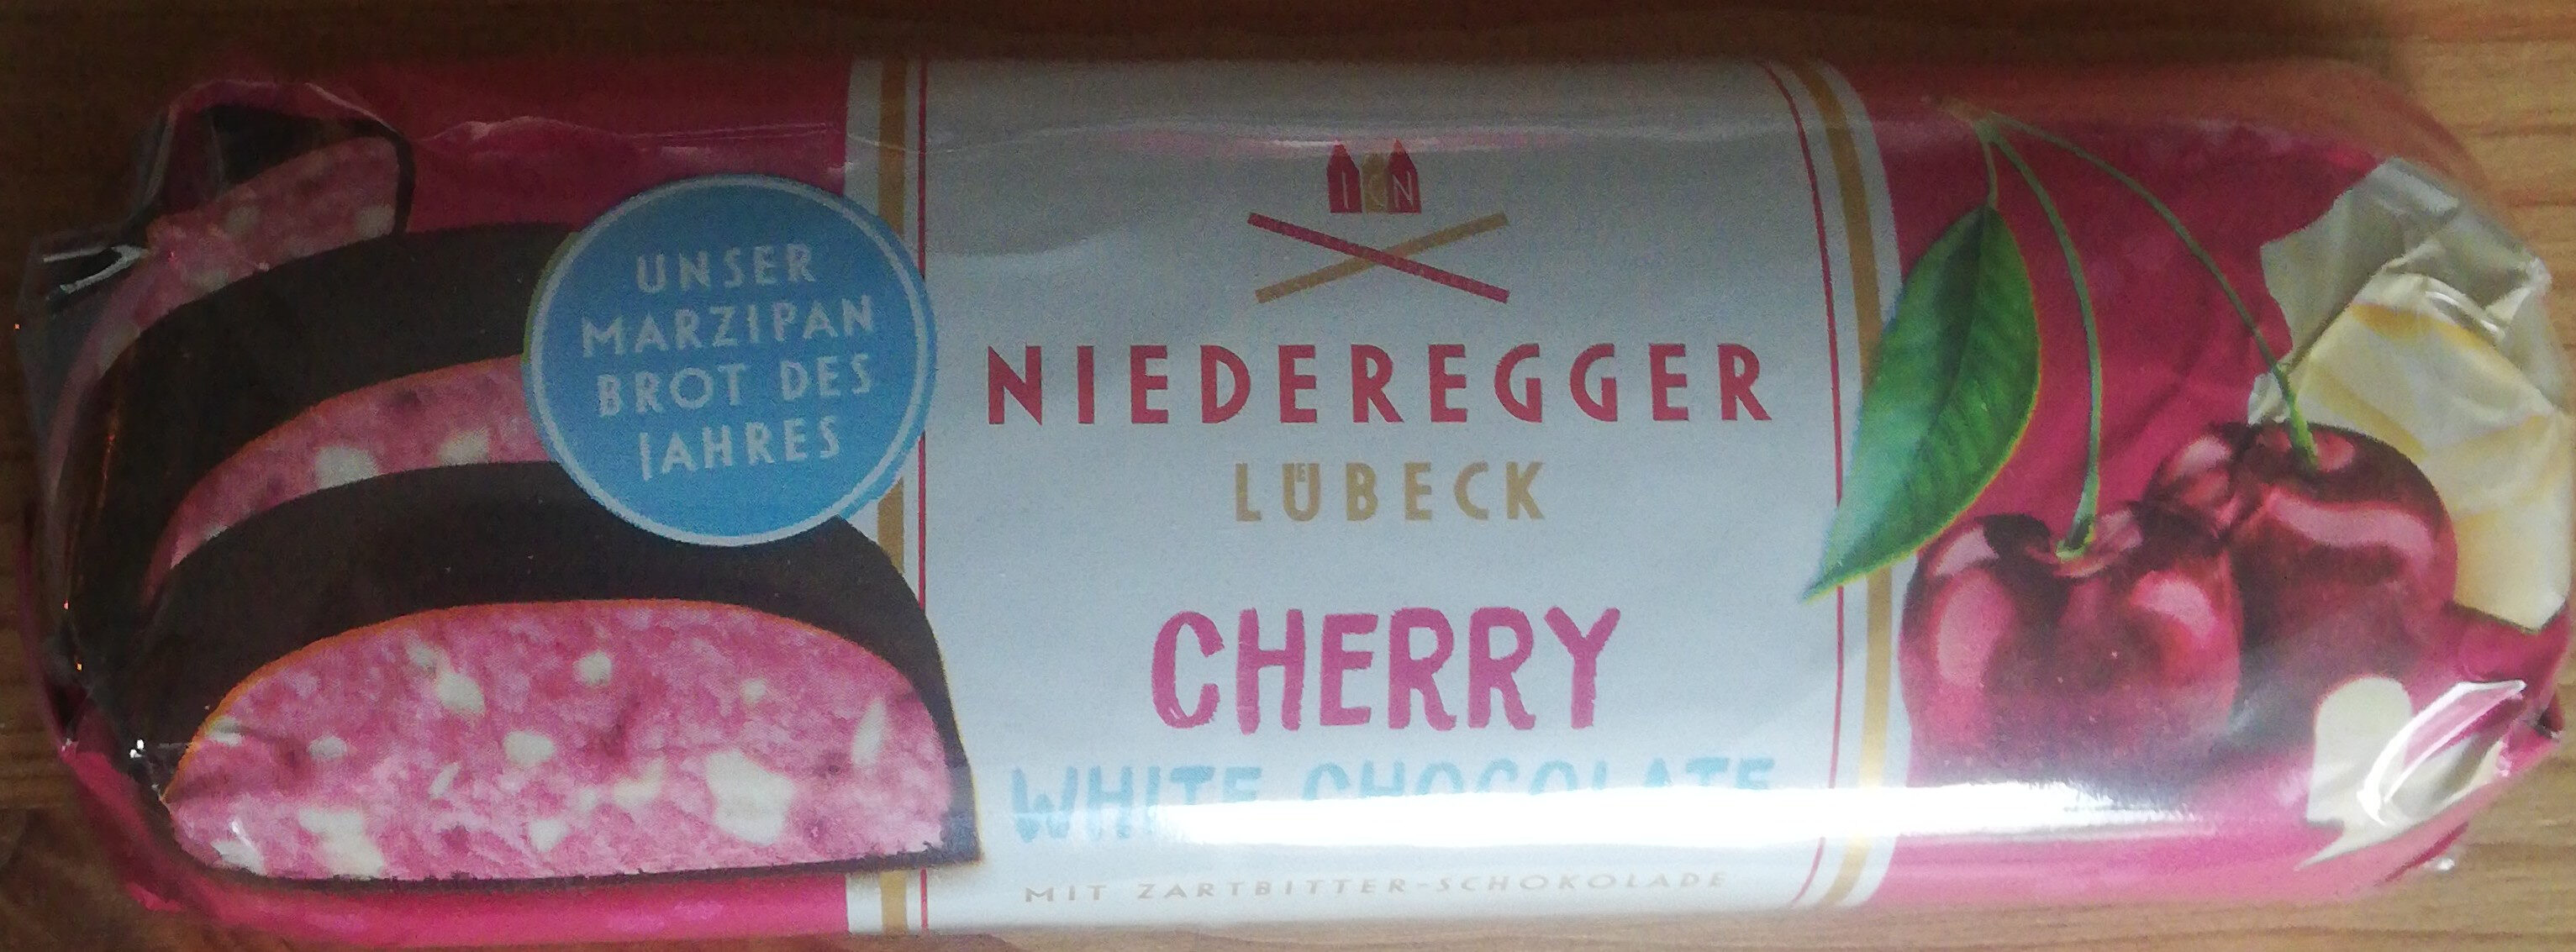 Cherry White Chocolate - Product - de